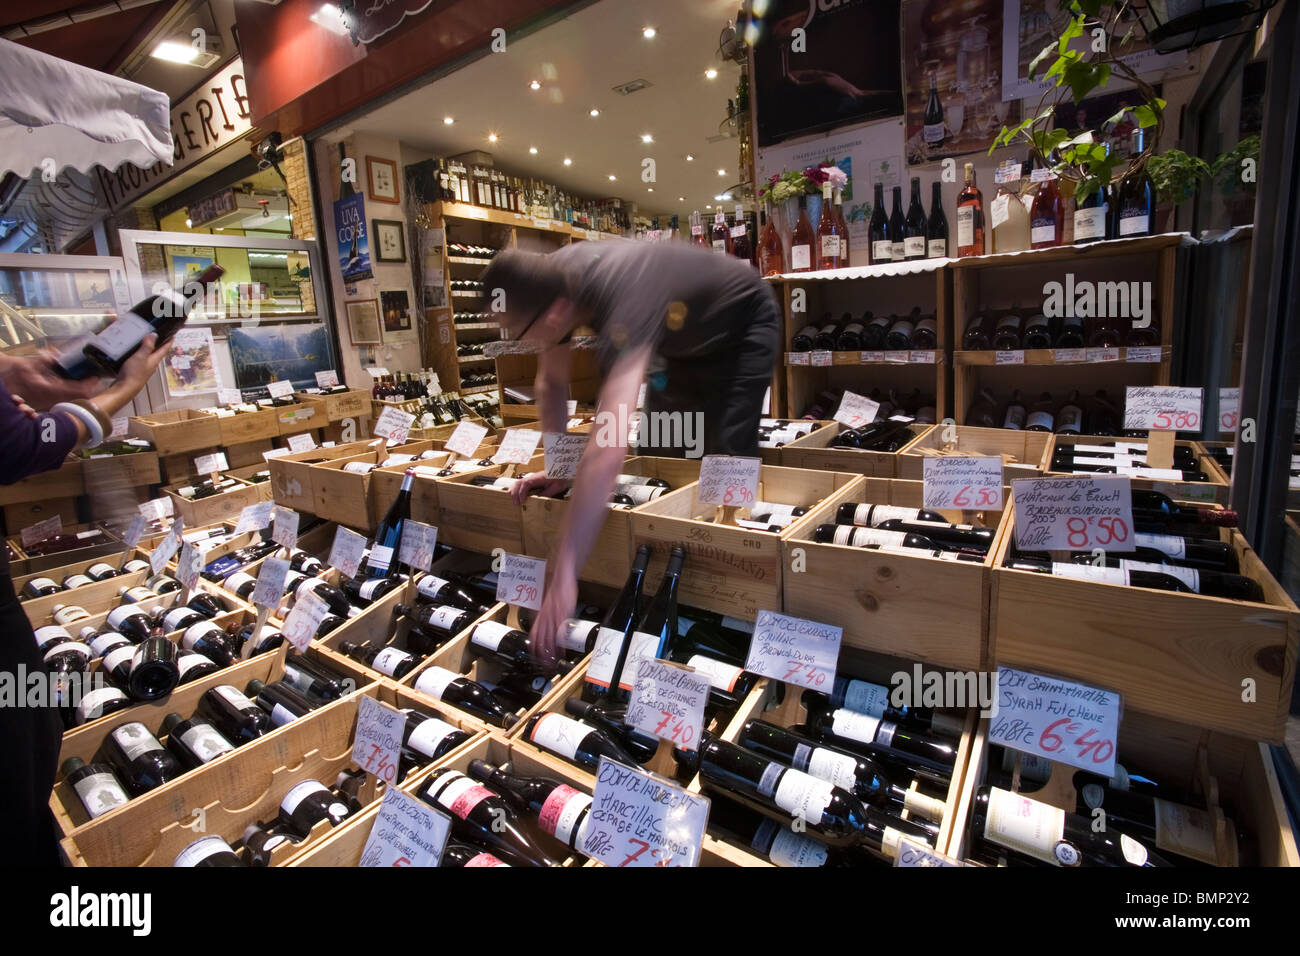 A winery in Rue Mouffetard, paris Stock Photo